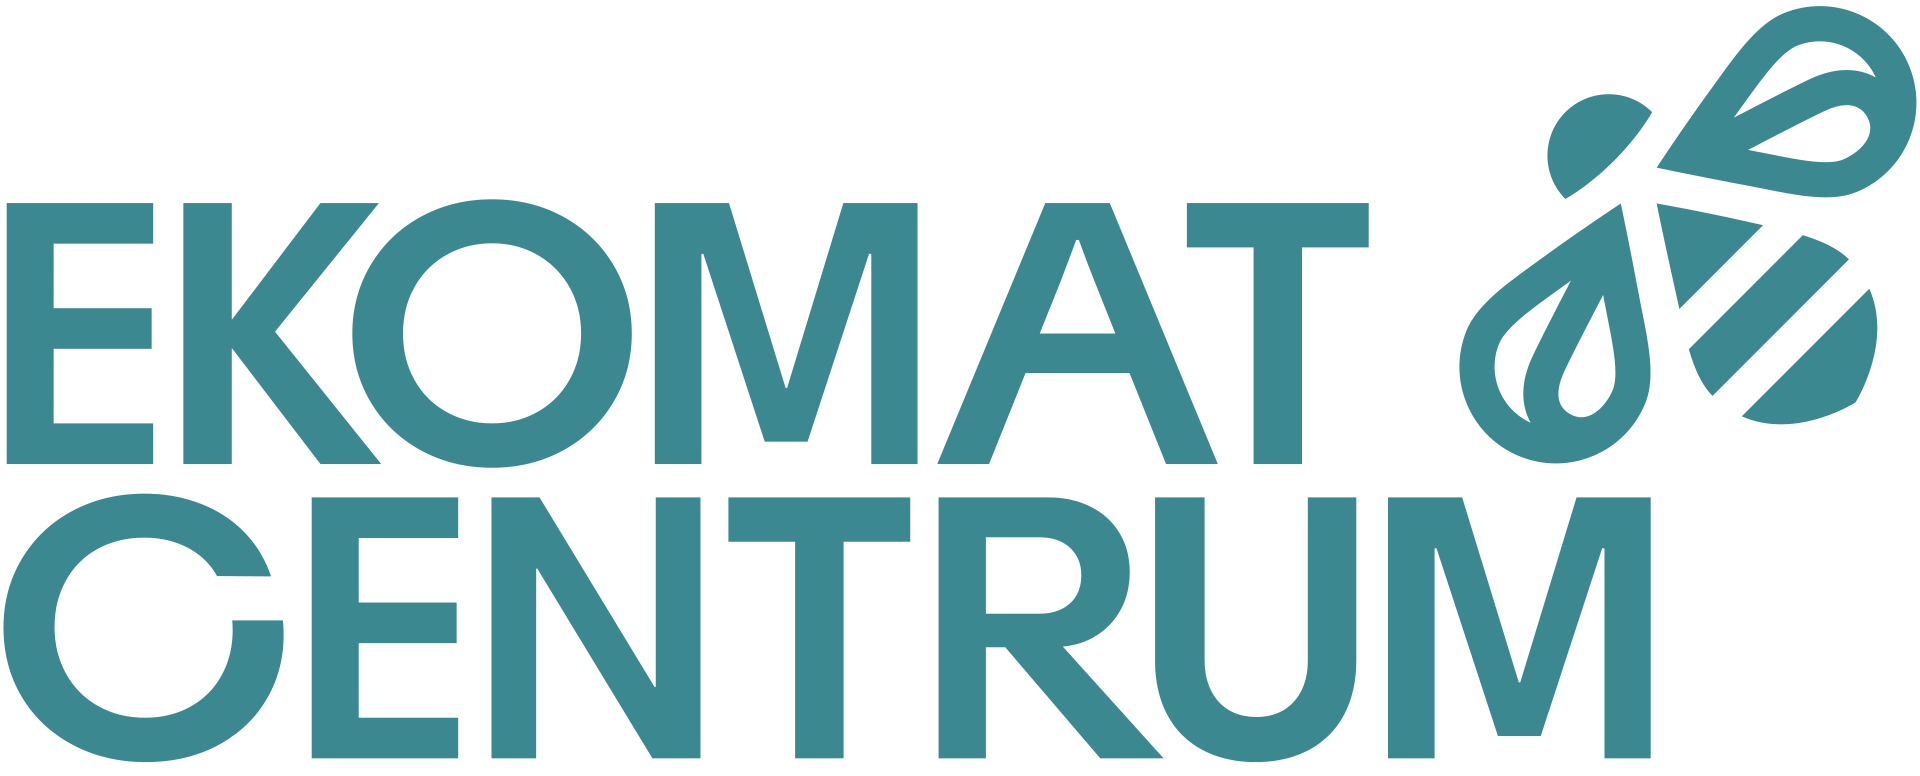 Ekomat Centrum logo.